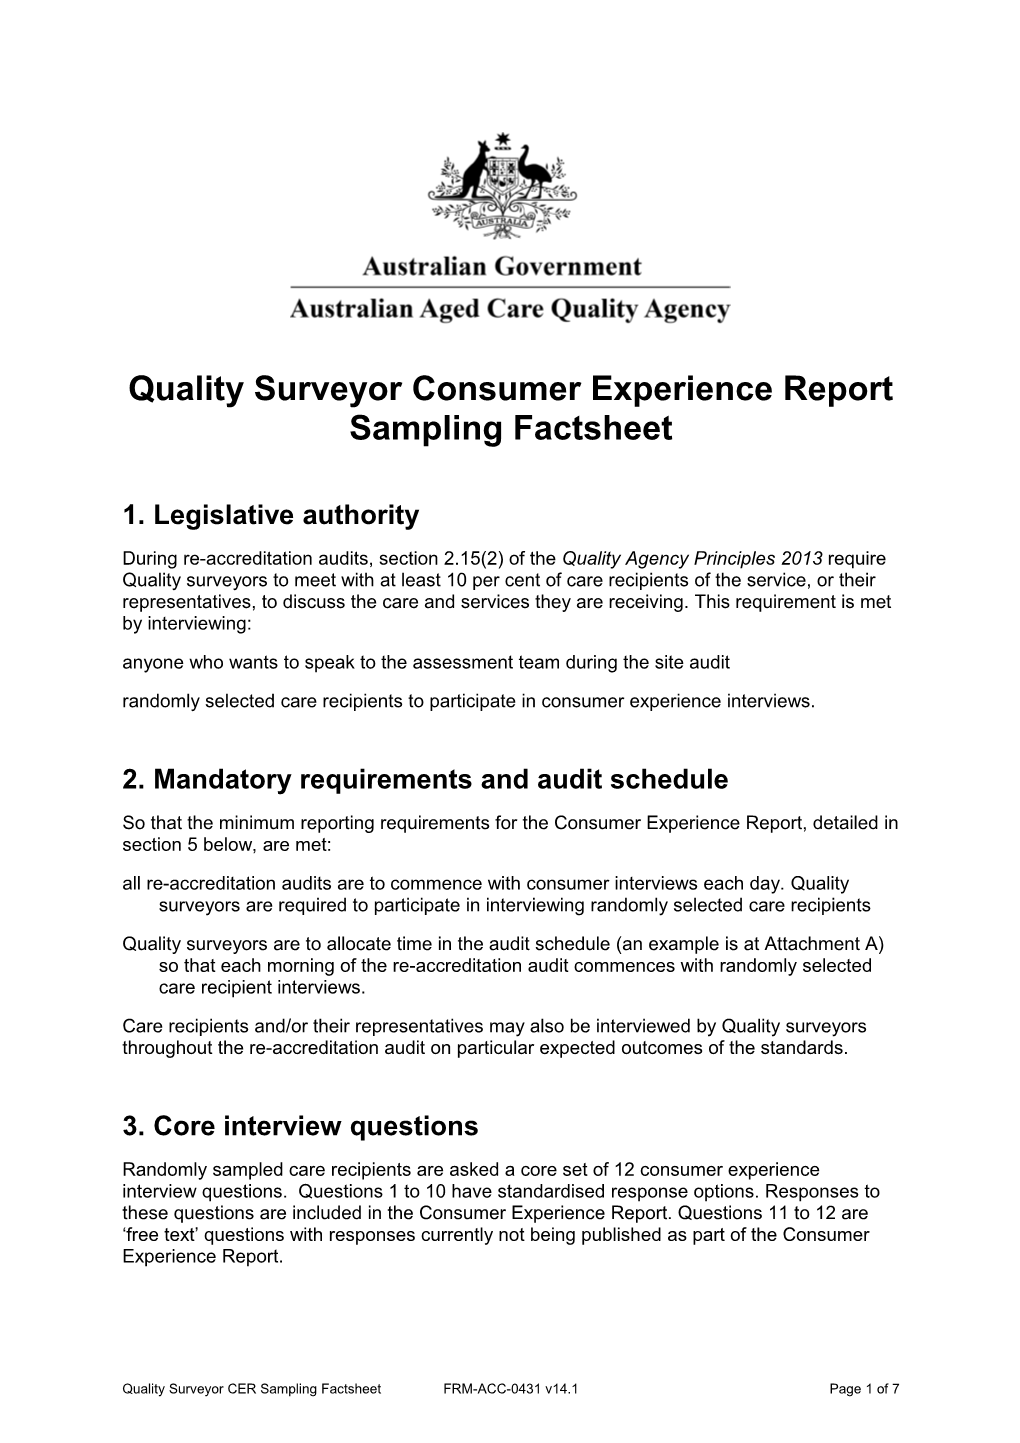 Consumer Experience Report - Sampling Factsheet